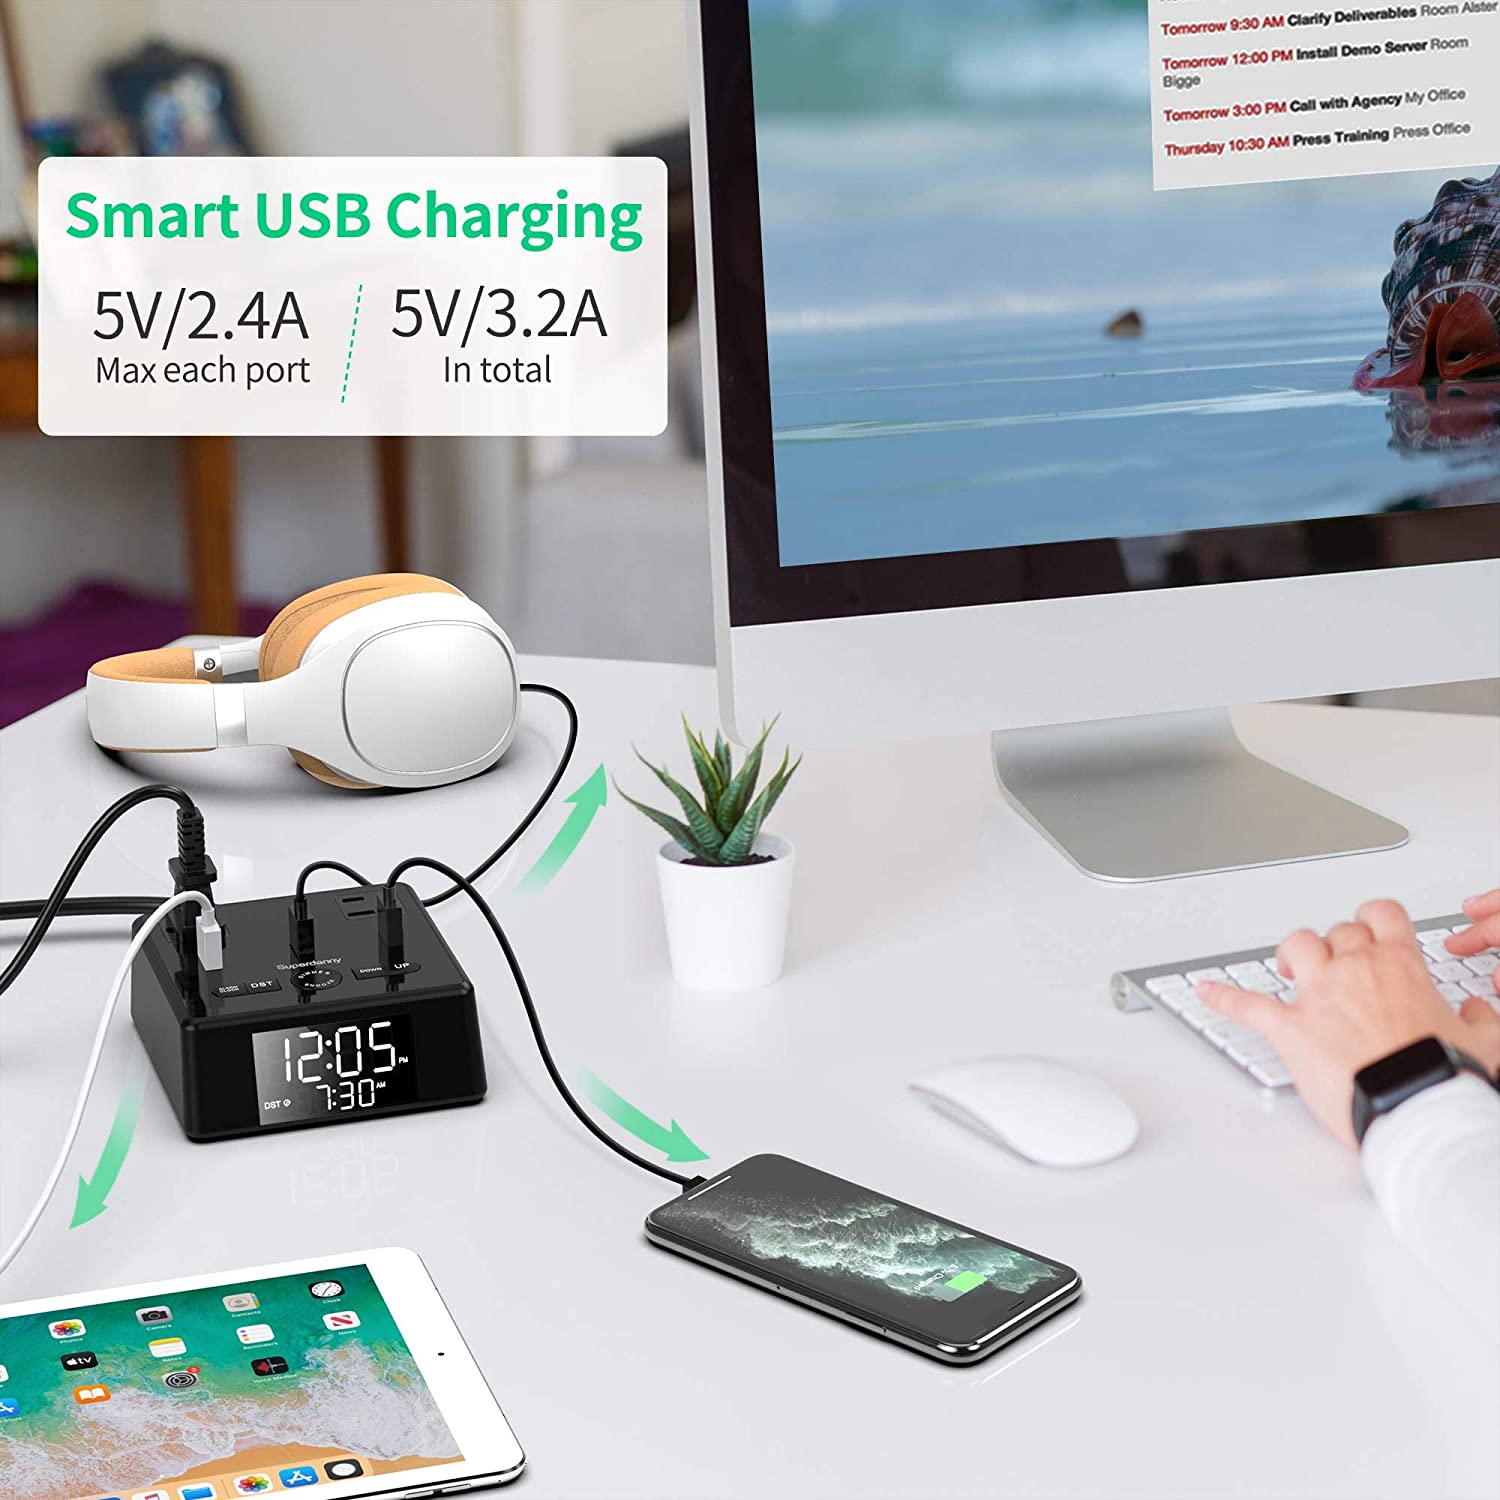 SUPERDANNY Digital Alarm Clock 3 USB Charger 2 AC Outlets 6.5ft